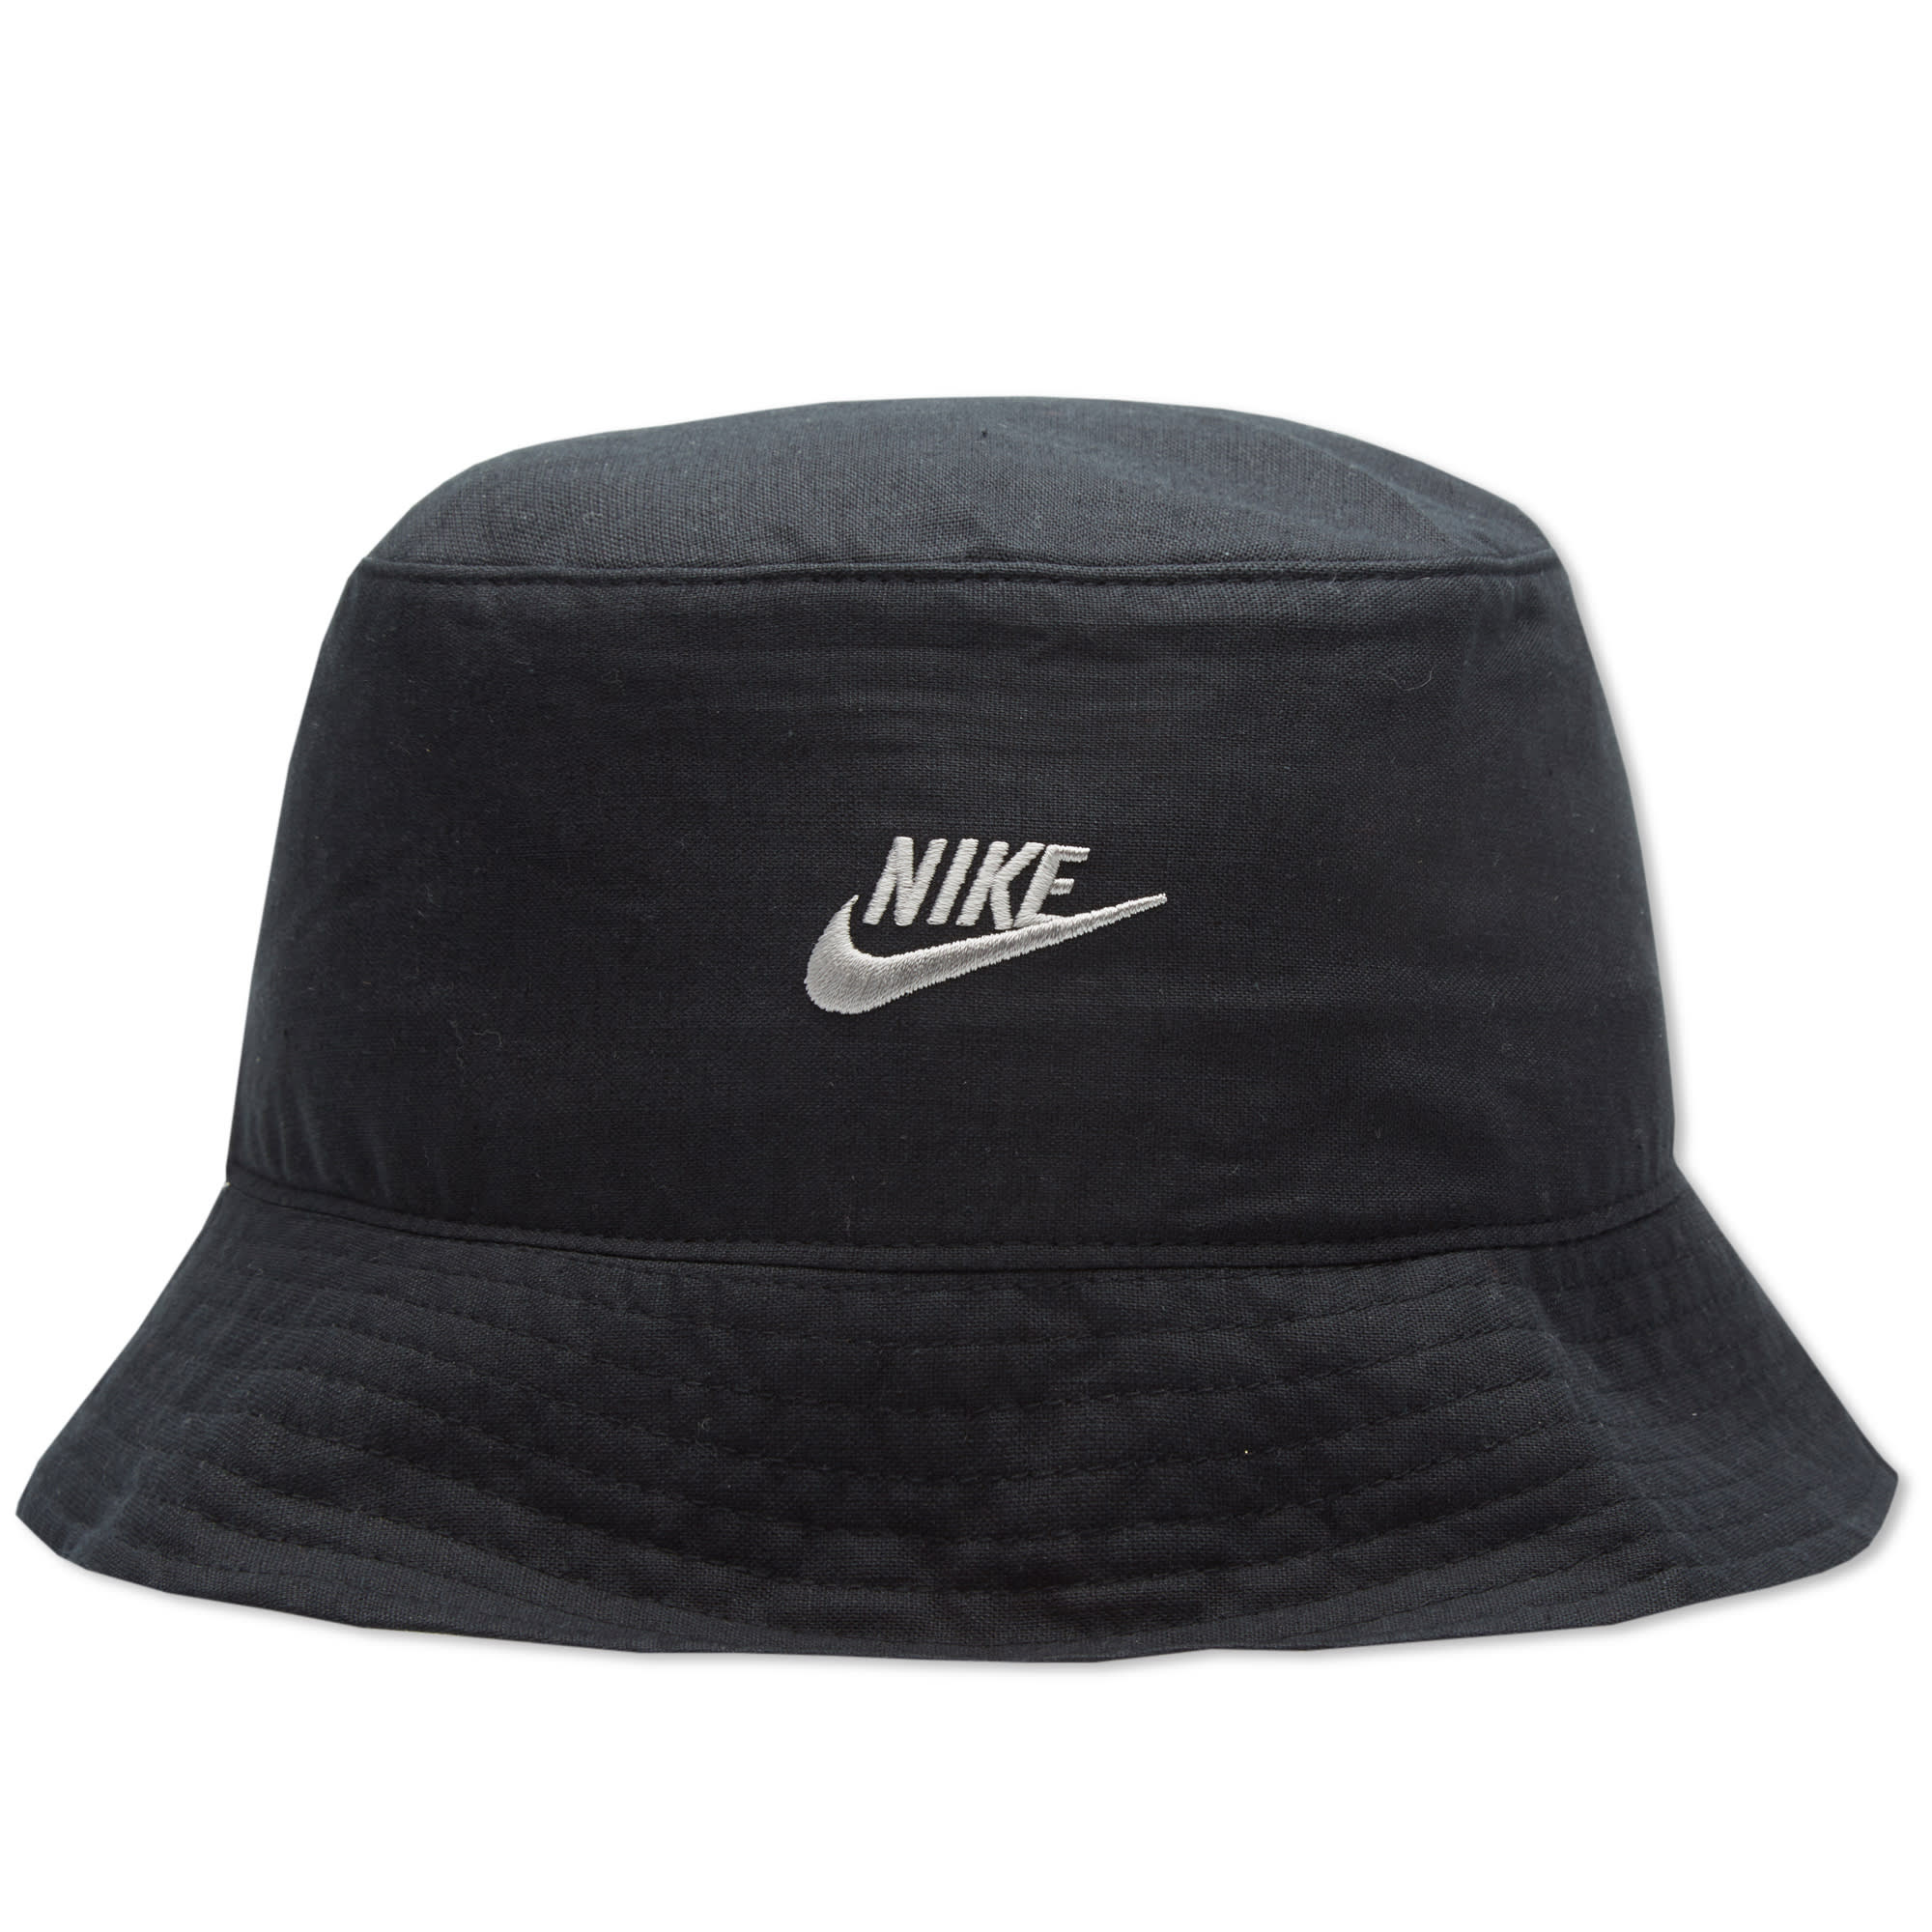 Nike Bucket Hat Black